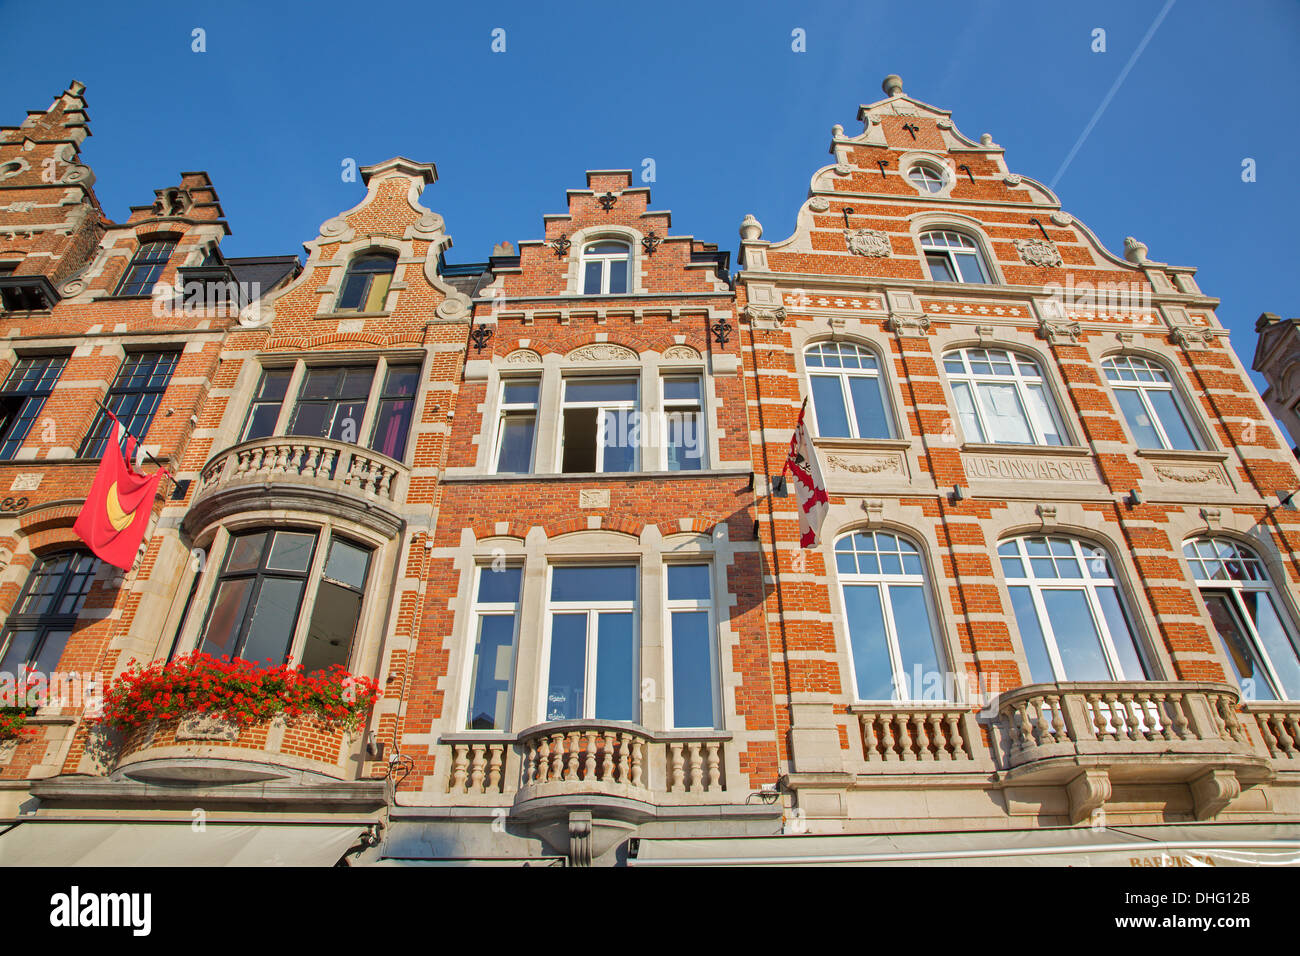 Leuven - Palaces of Oude markt Stock Photo